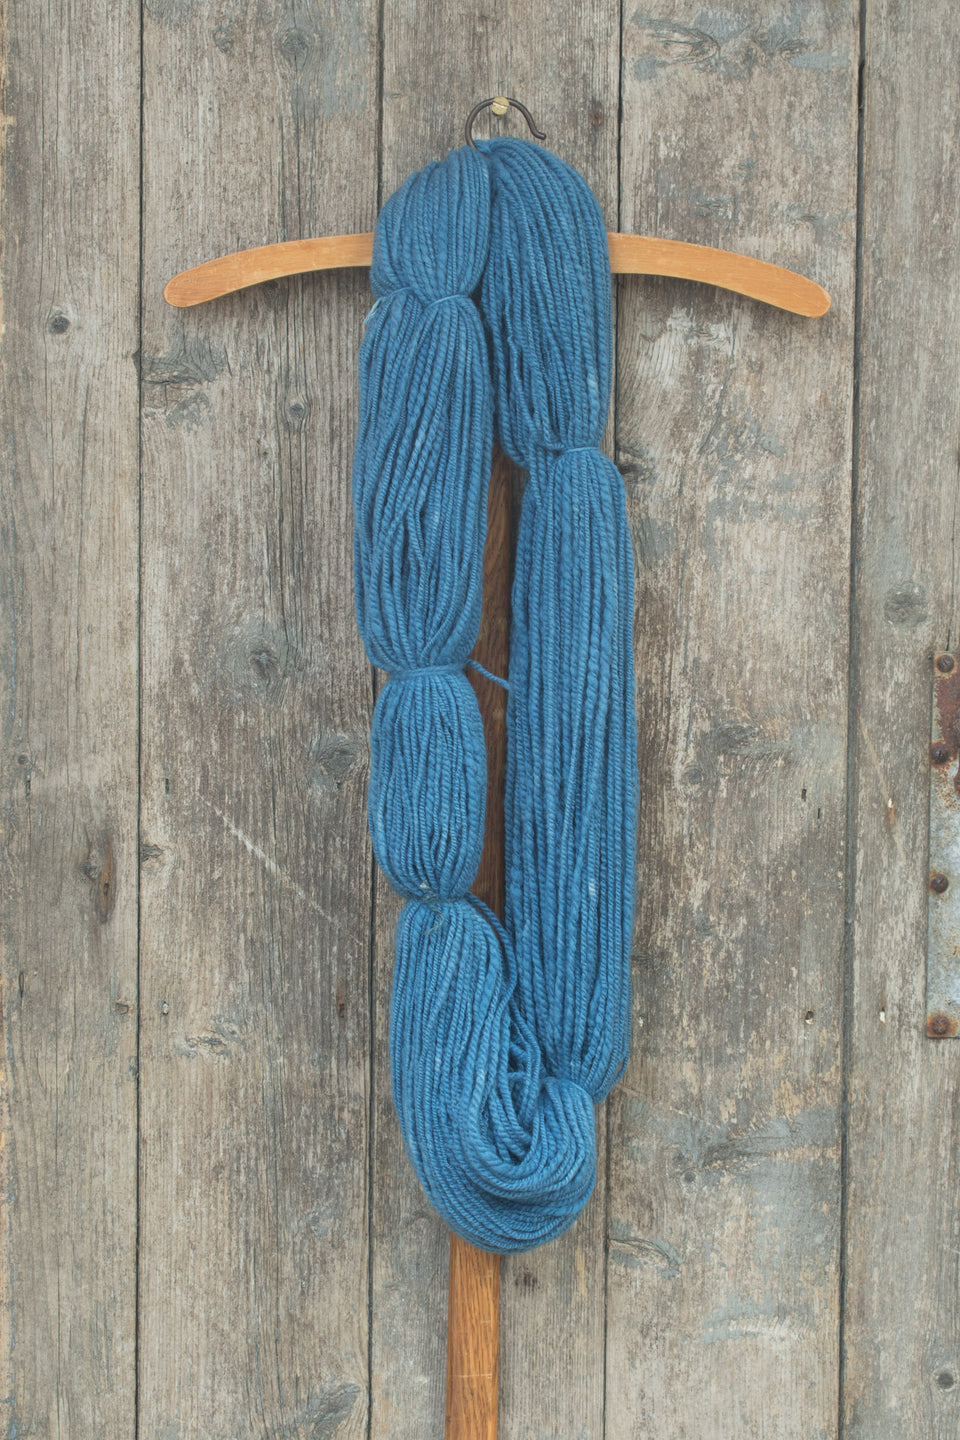 handspun, hand-dyed indigo yarn. polwarth and shetland blend. shown in a large hank